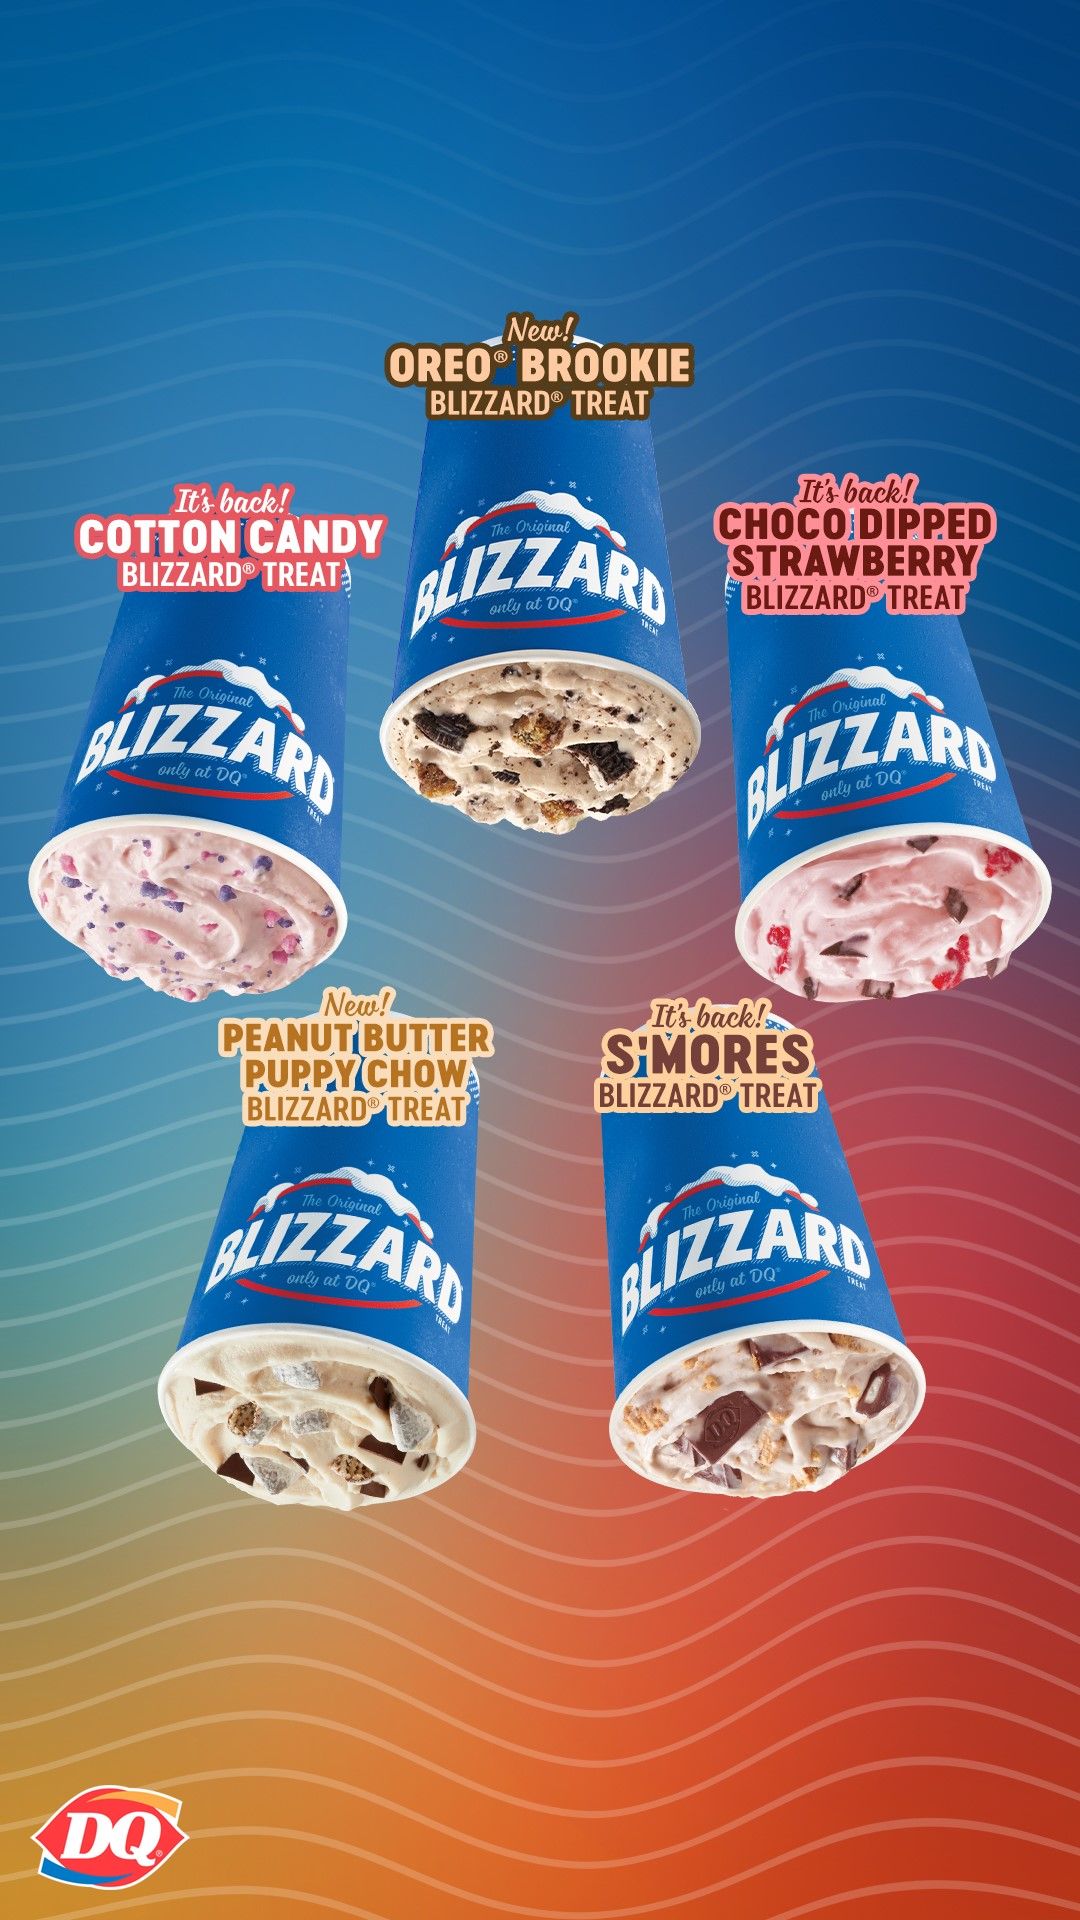 blizzard new flavors 